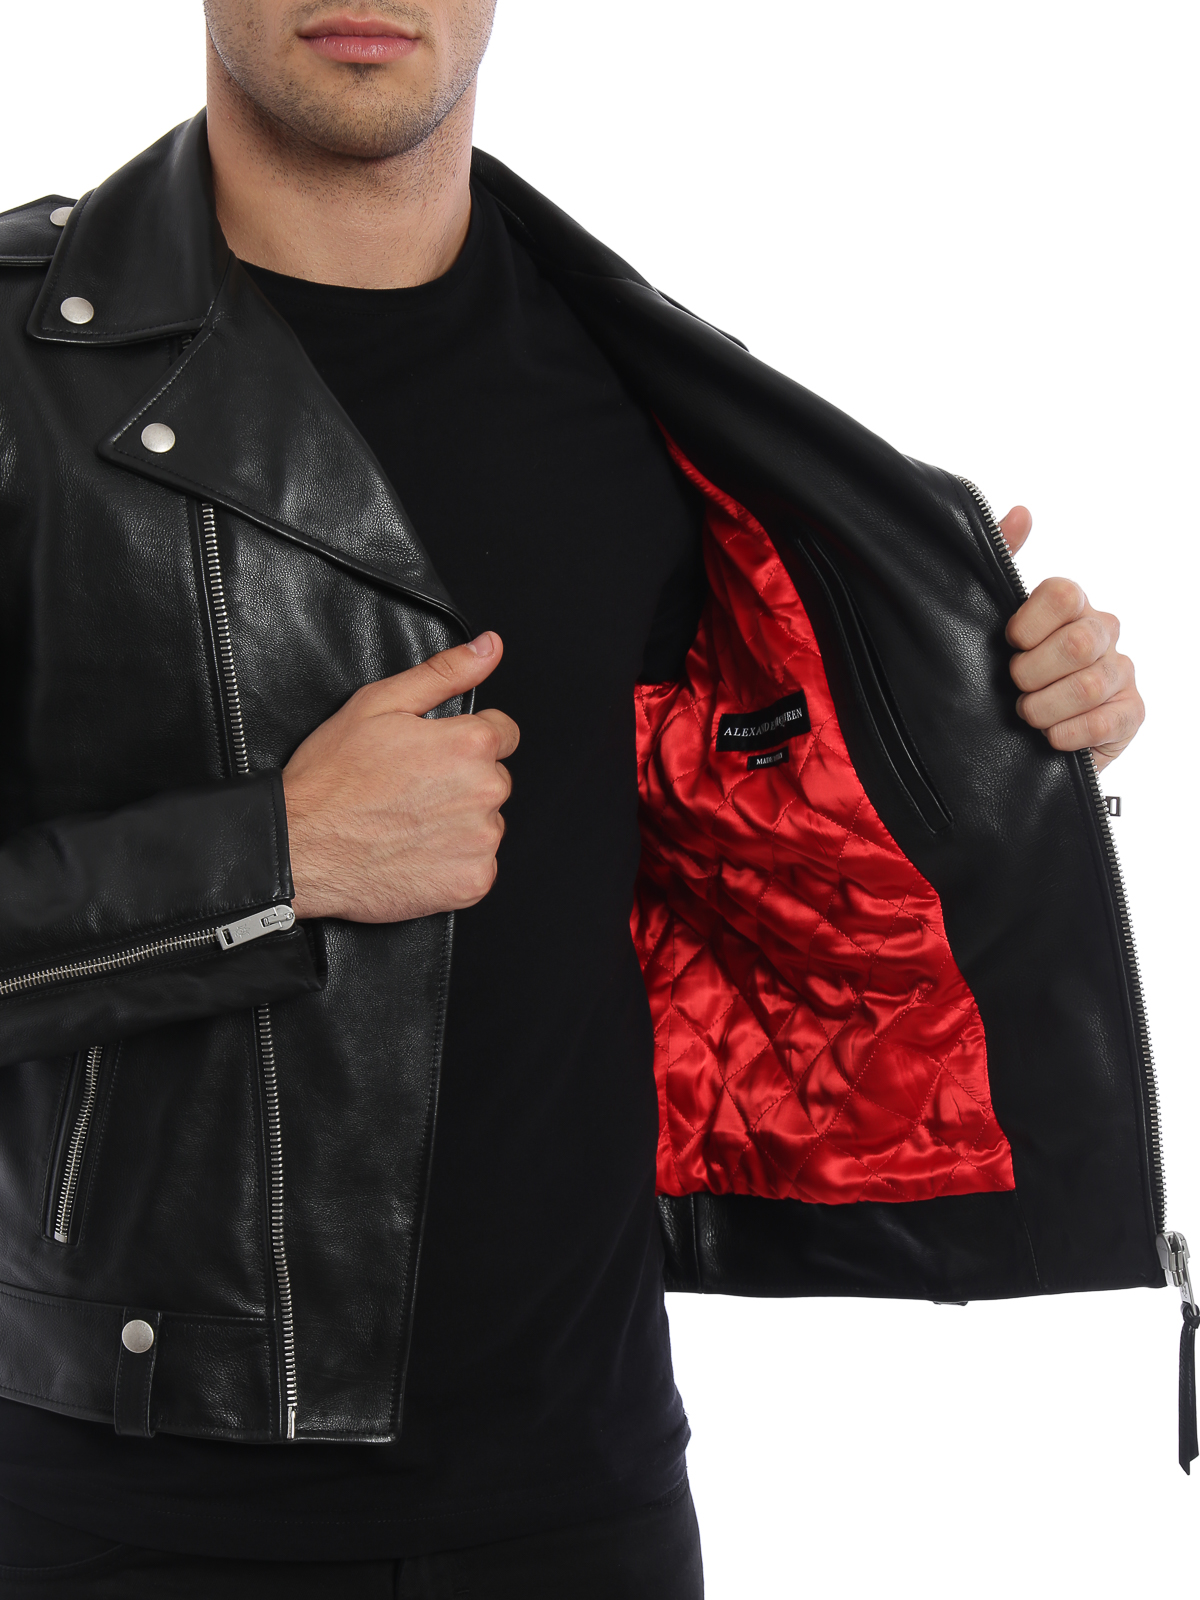 Alexander McQueen Leather Biker Jacket in Black for Men Mens Clothing Jackets Leather jackets Save 61% 